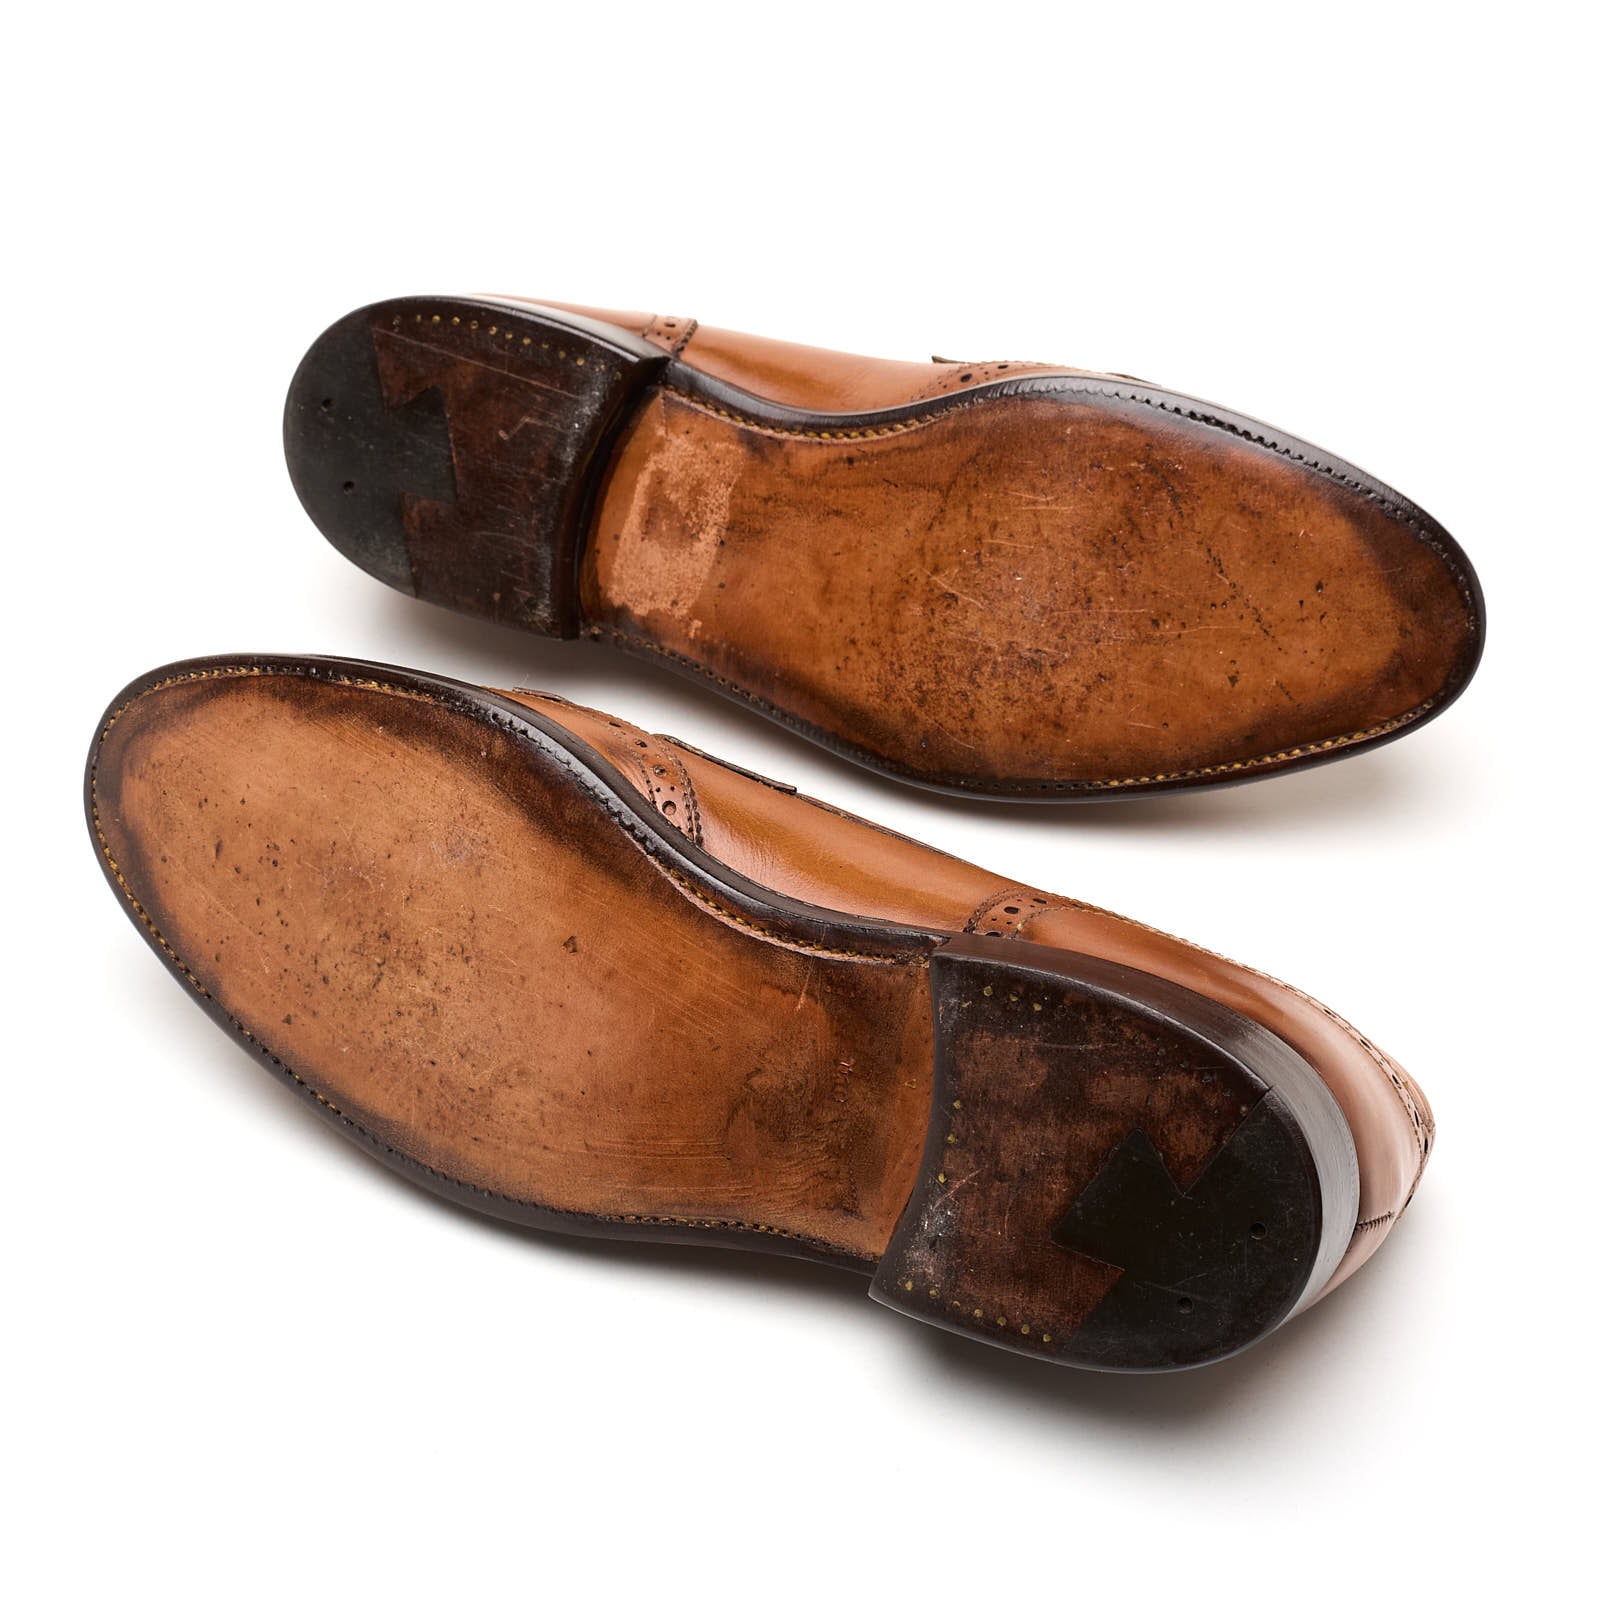 ALDEN 610 for Mills Touche Cognac Tassel Kilts Wing Tip Loafer Shoes US 8.5 C/E